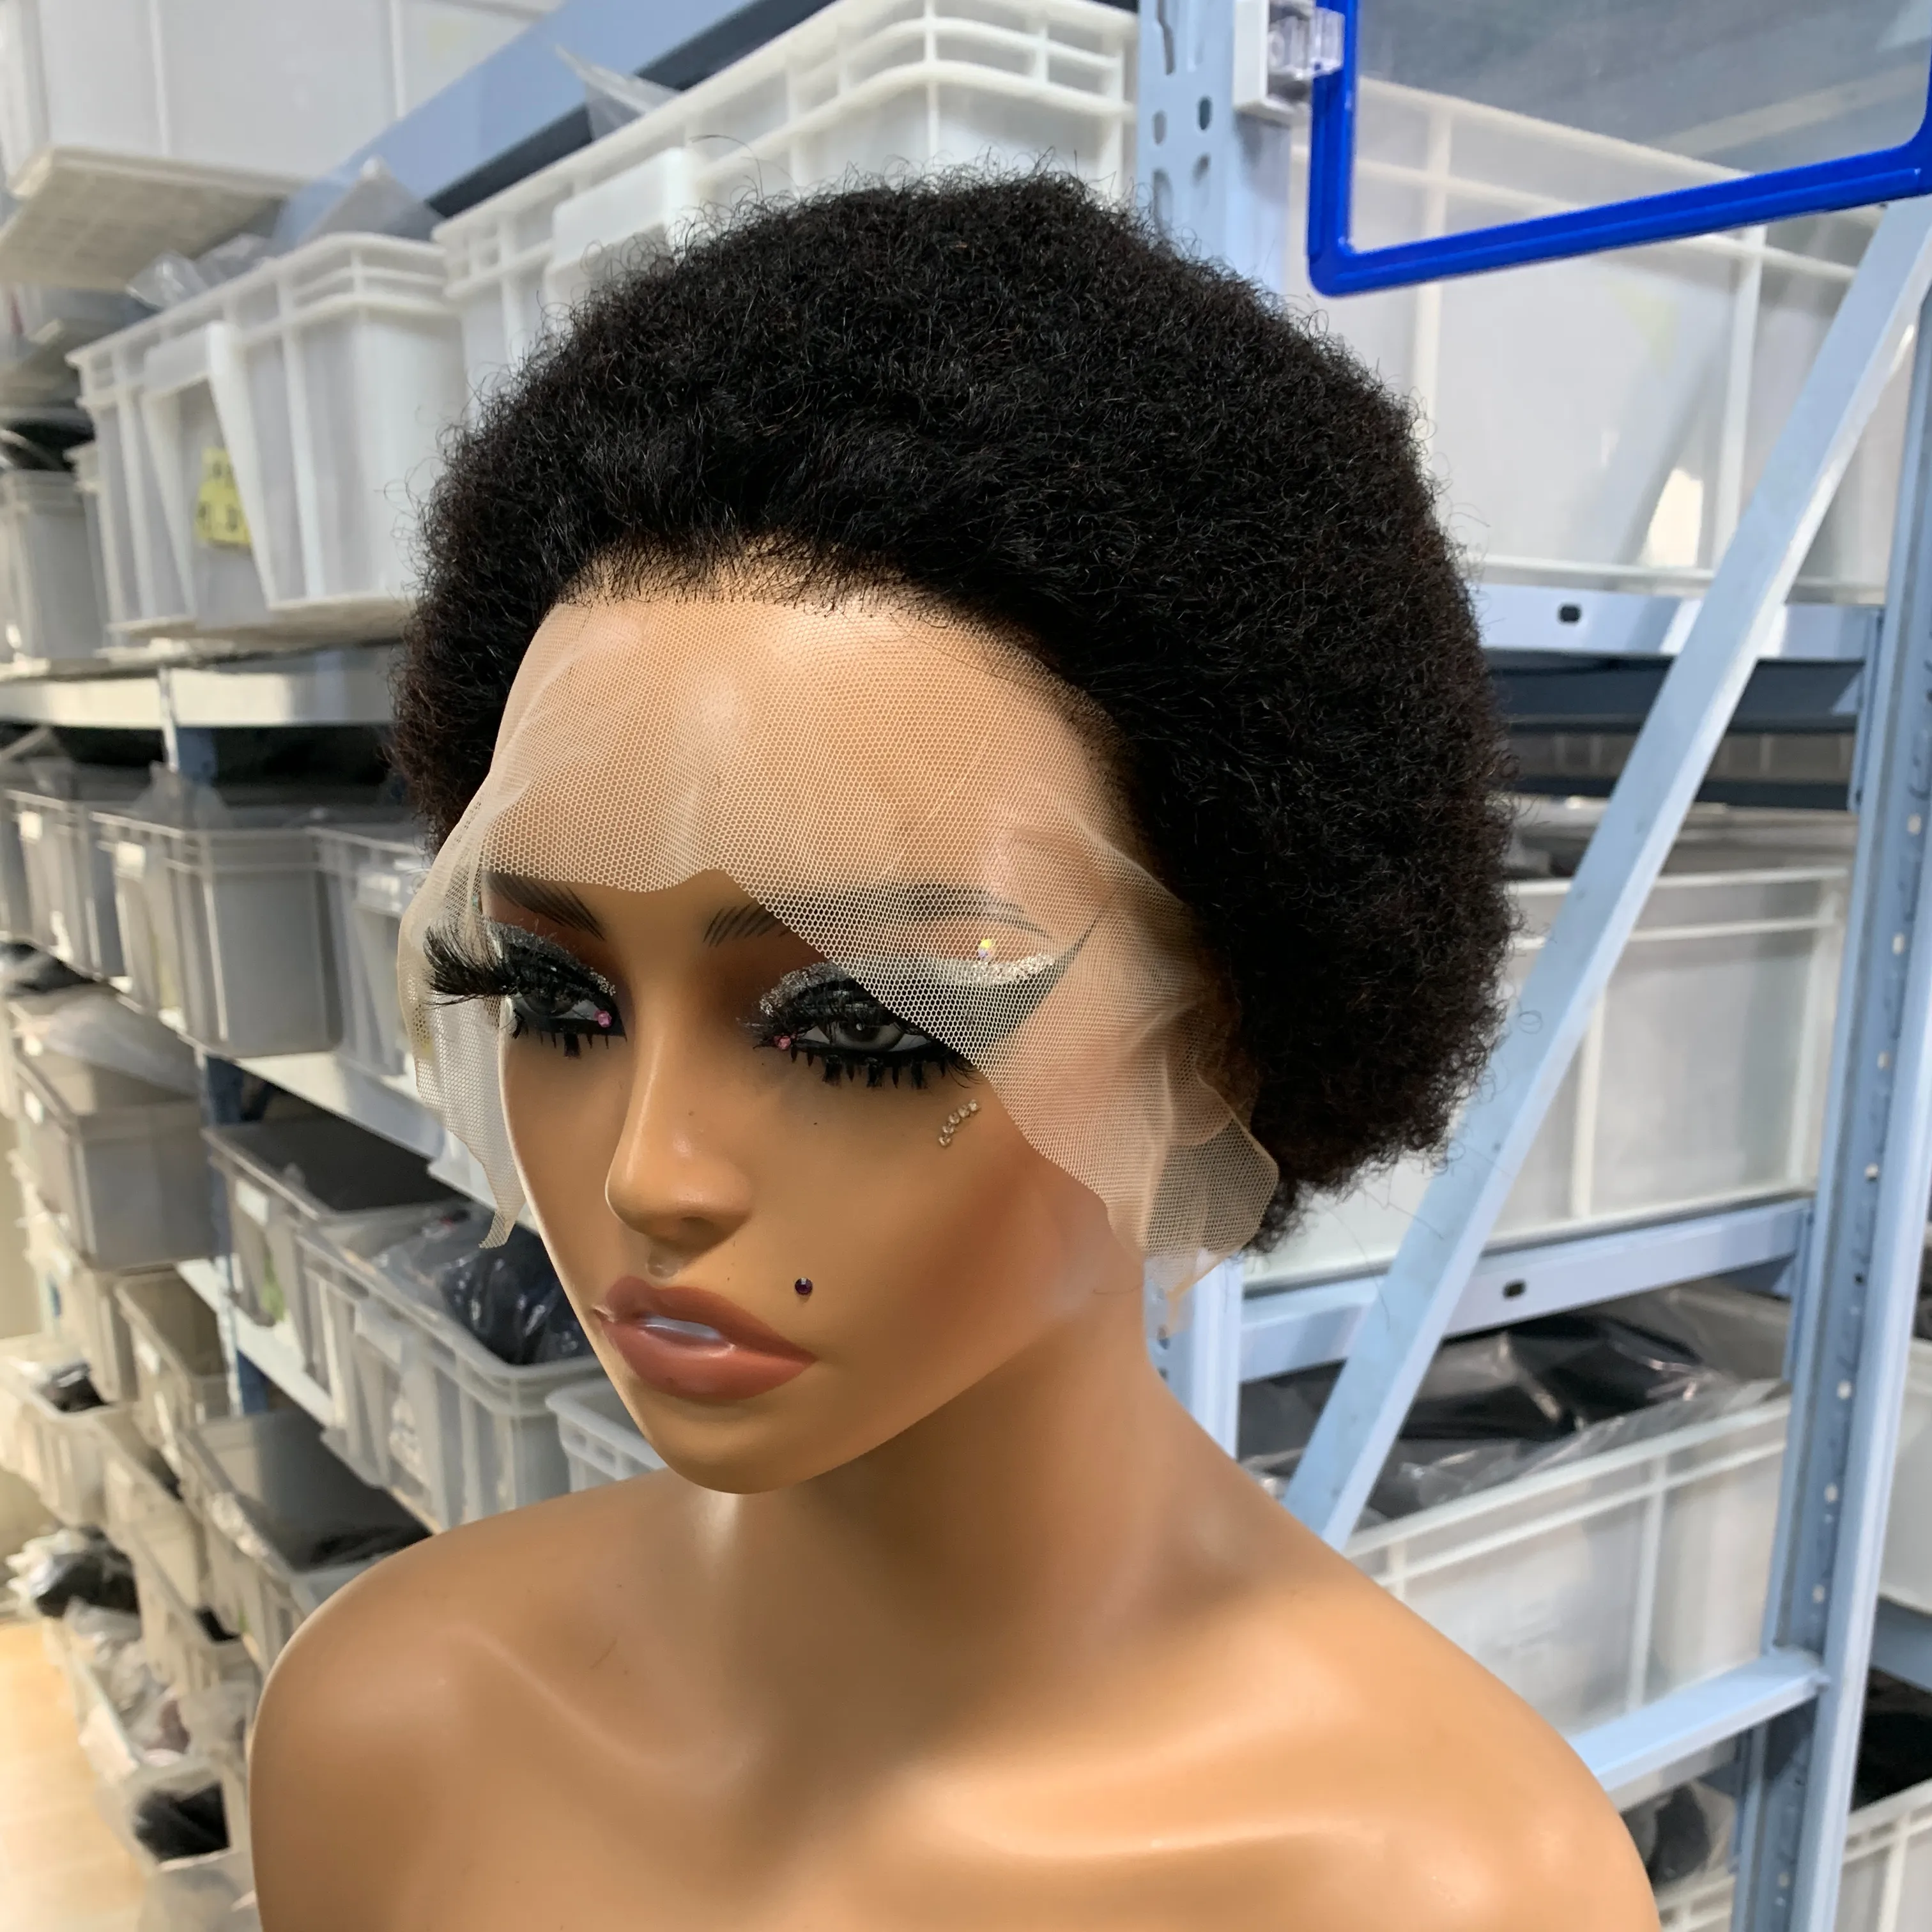 Fornecedor de cabelo por atacado 13x4 renda frontal transparente corte curto encaracolado 100% peruca de cabelo humano cabelo brasileiro para mulheres negras